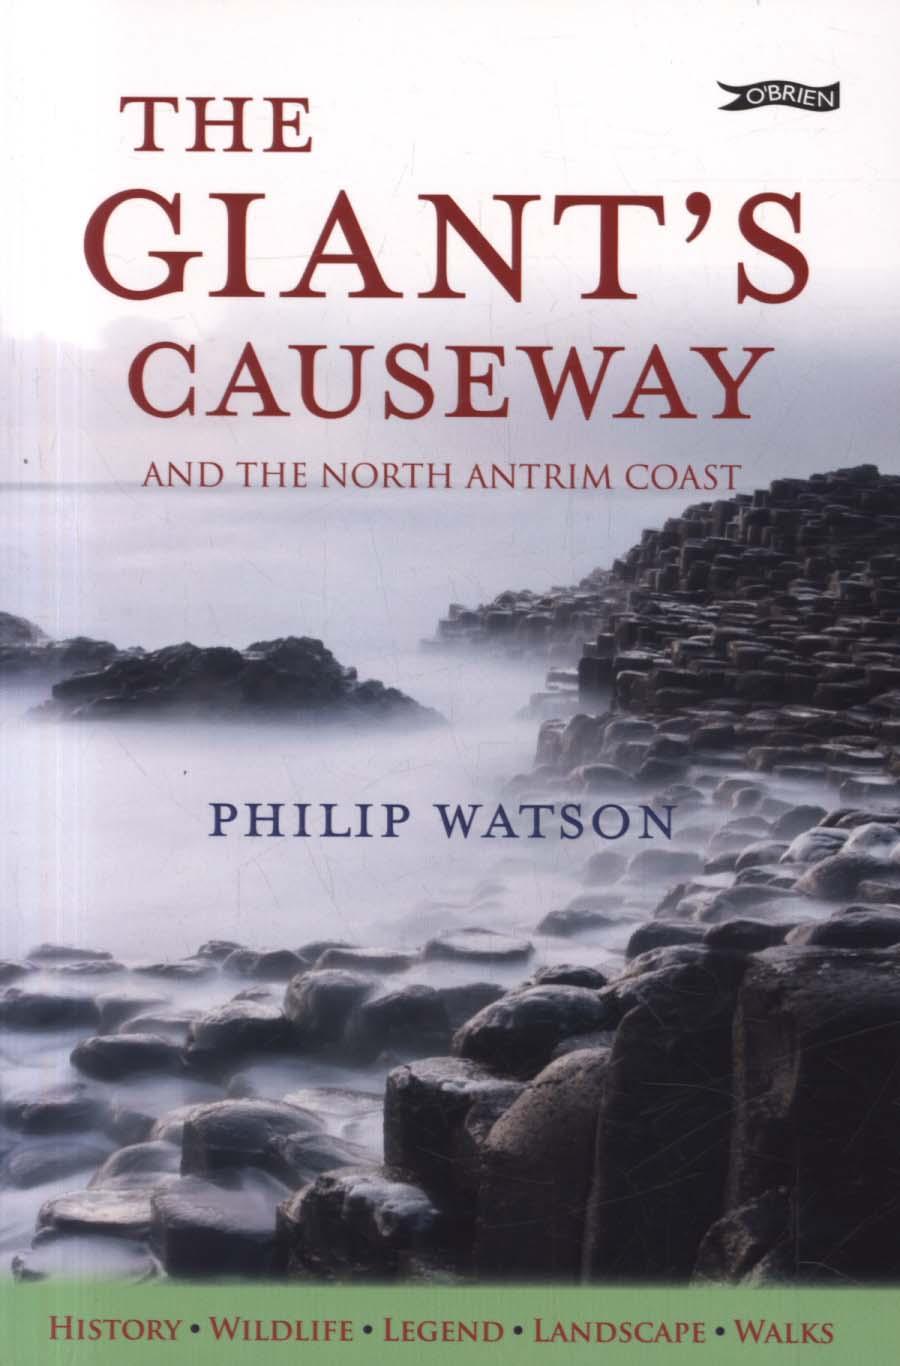 Giant's Causeway - Philip Watson